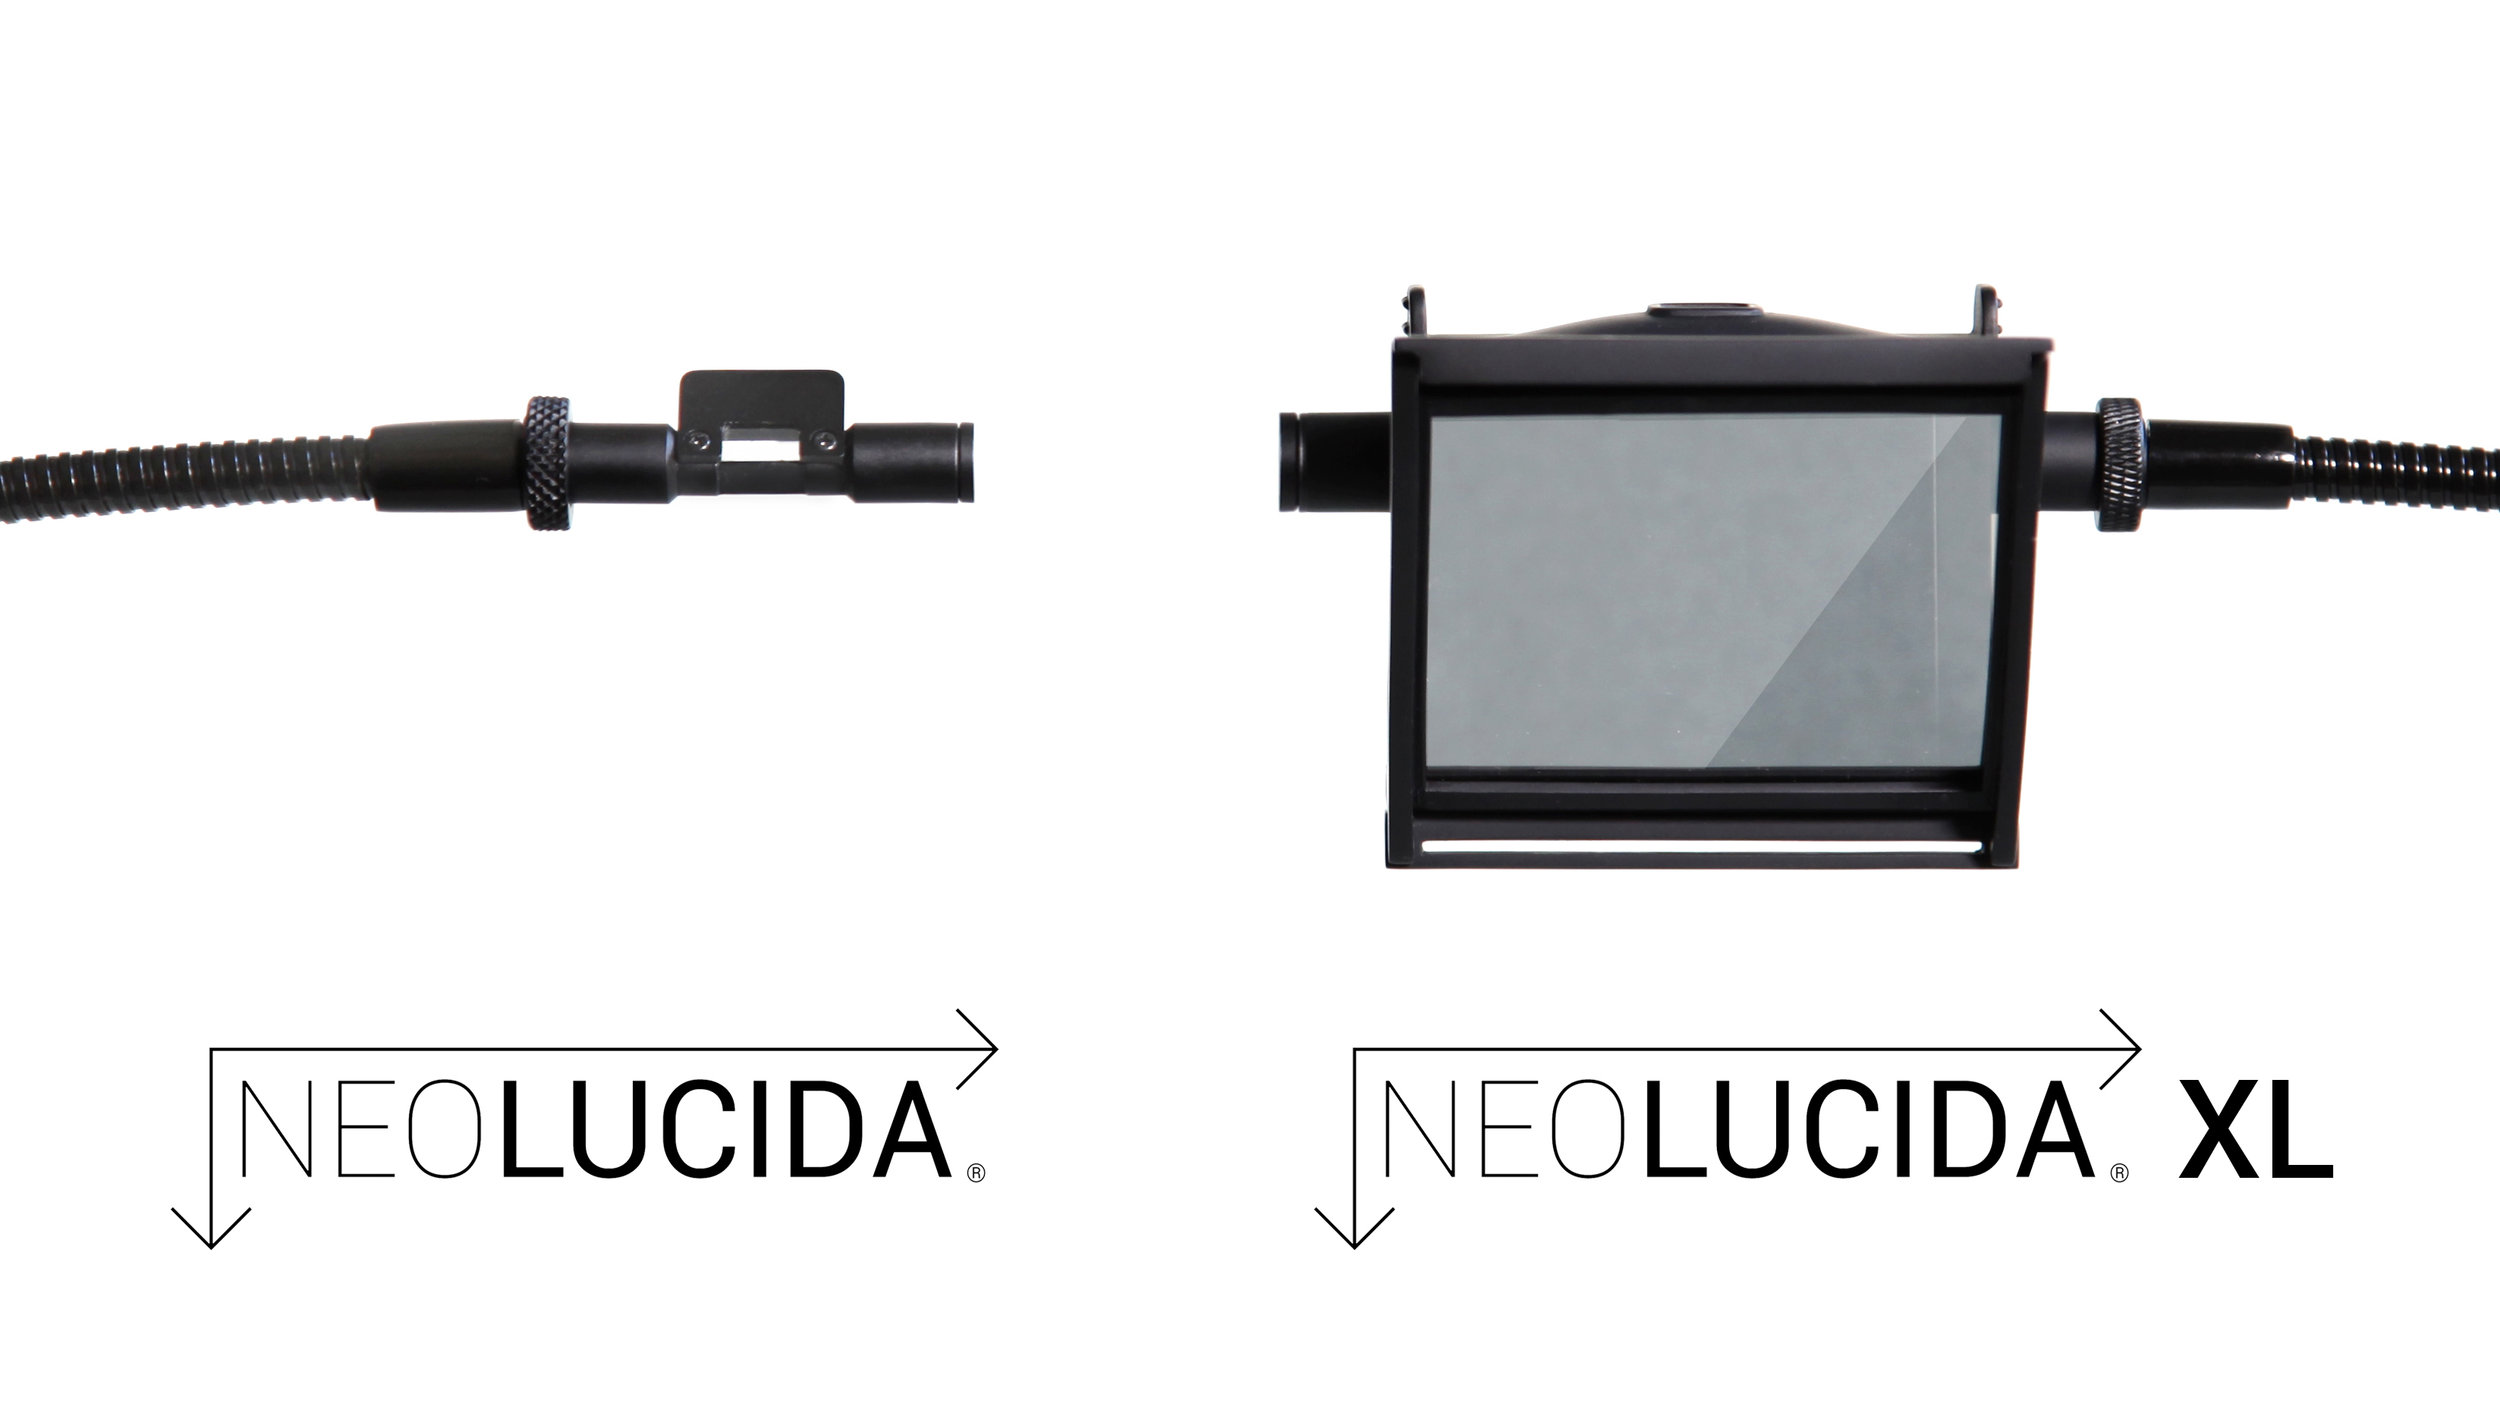 NeoLucida The 21st Century Camera Lucida